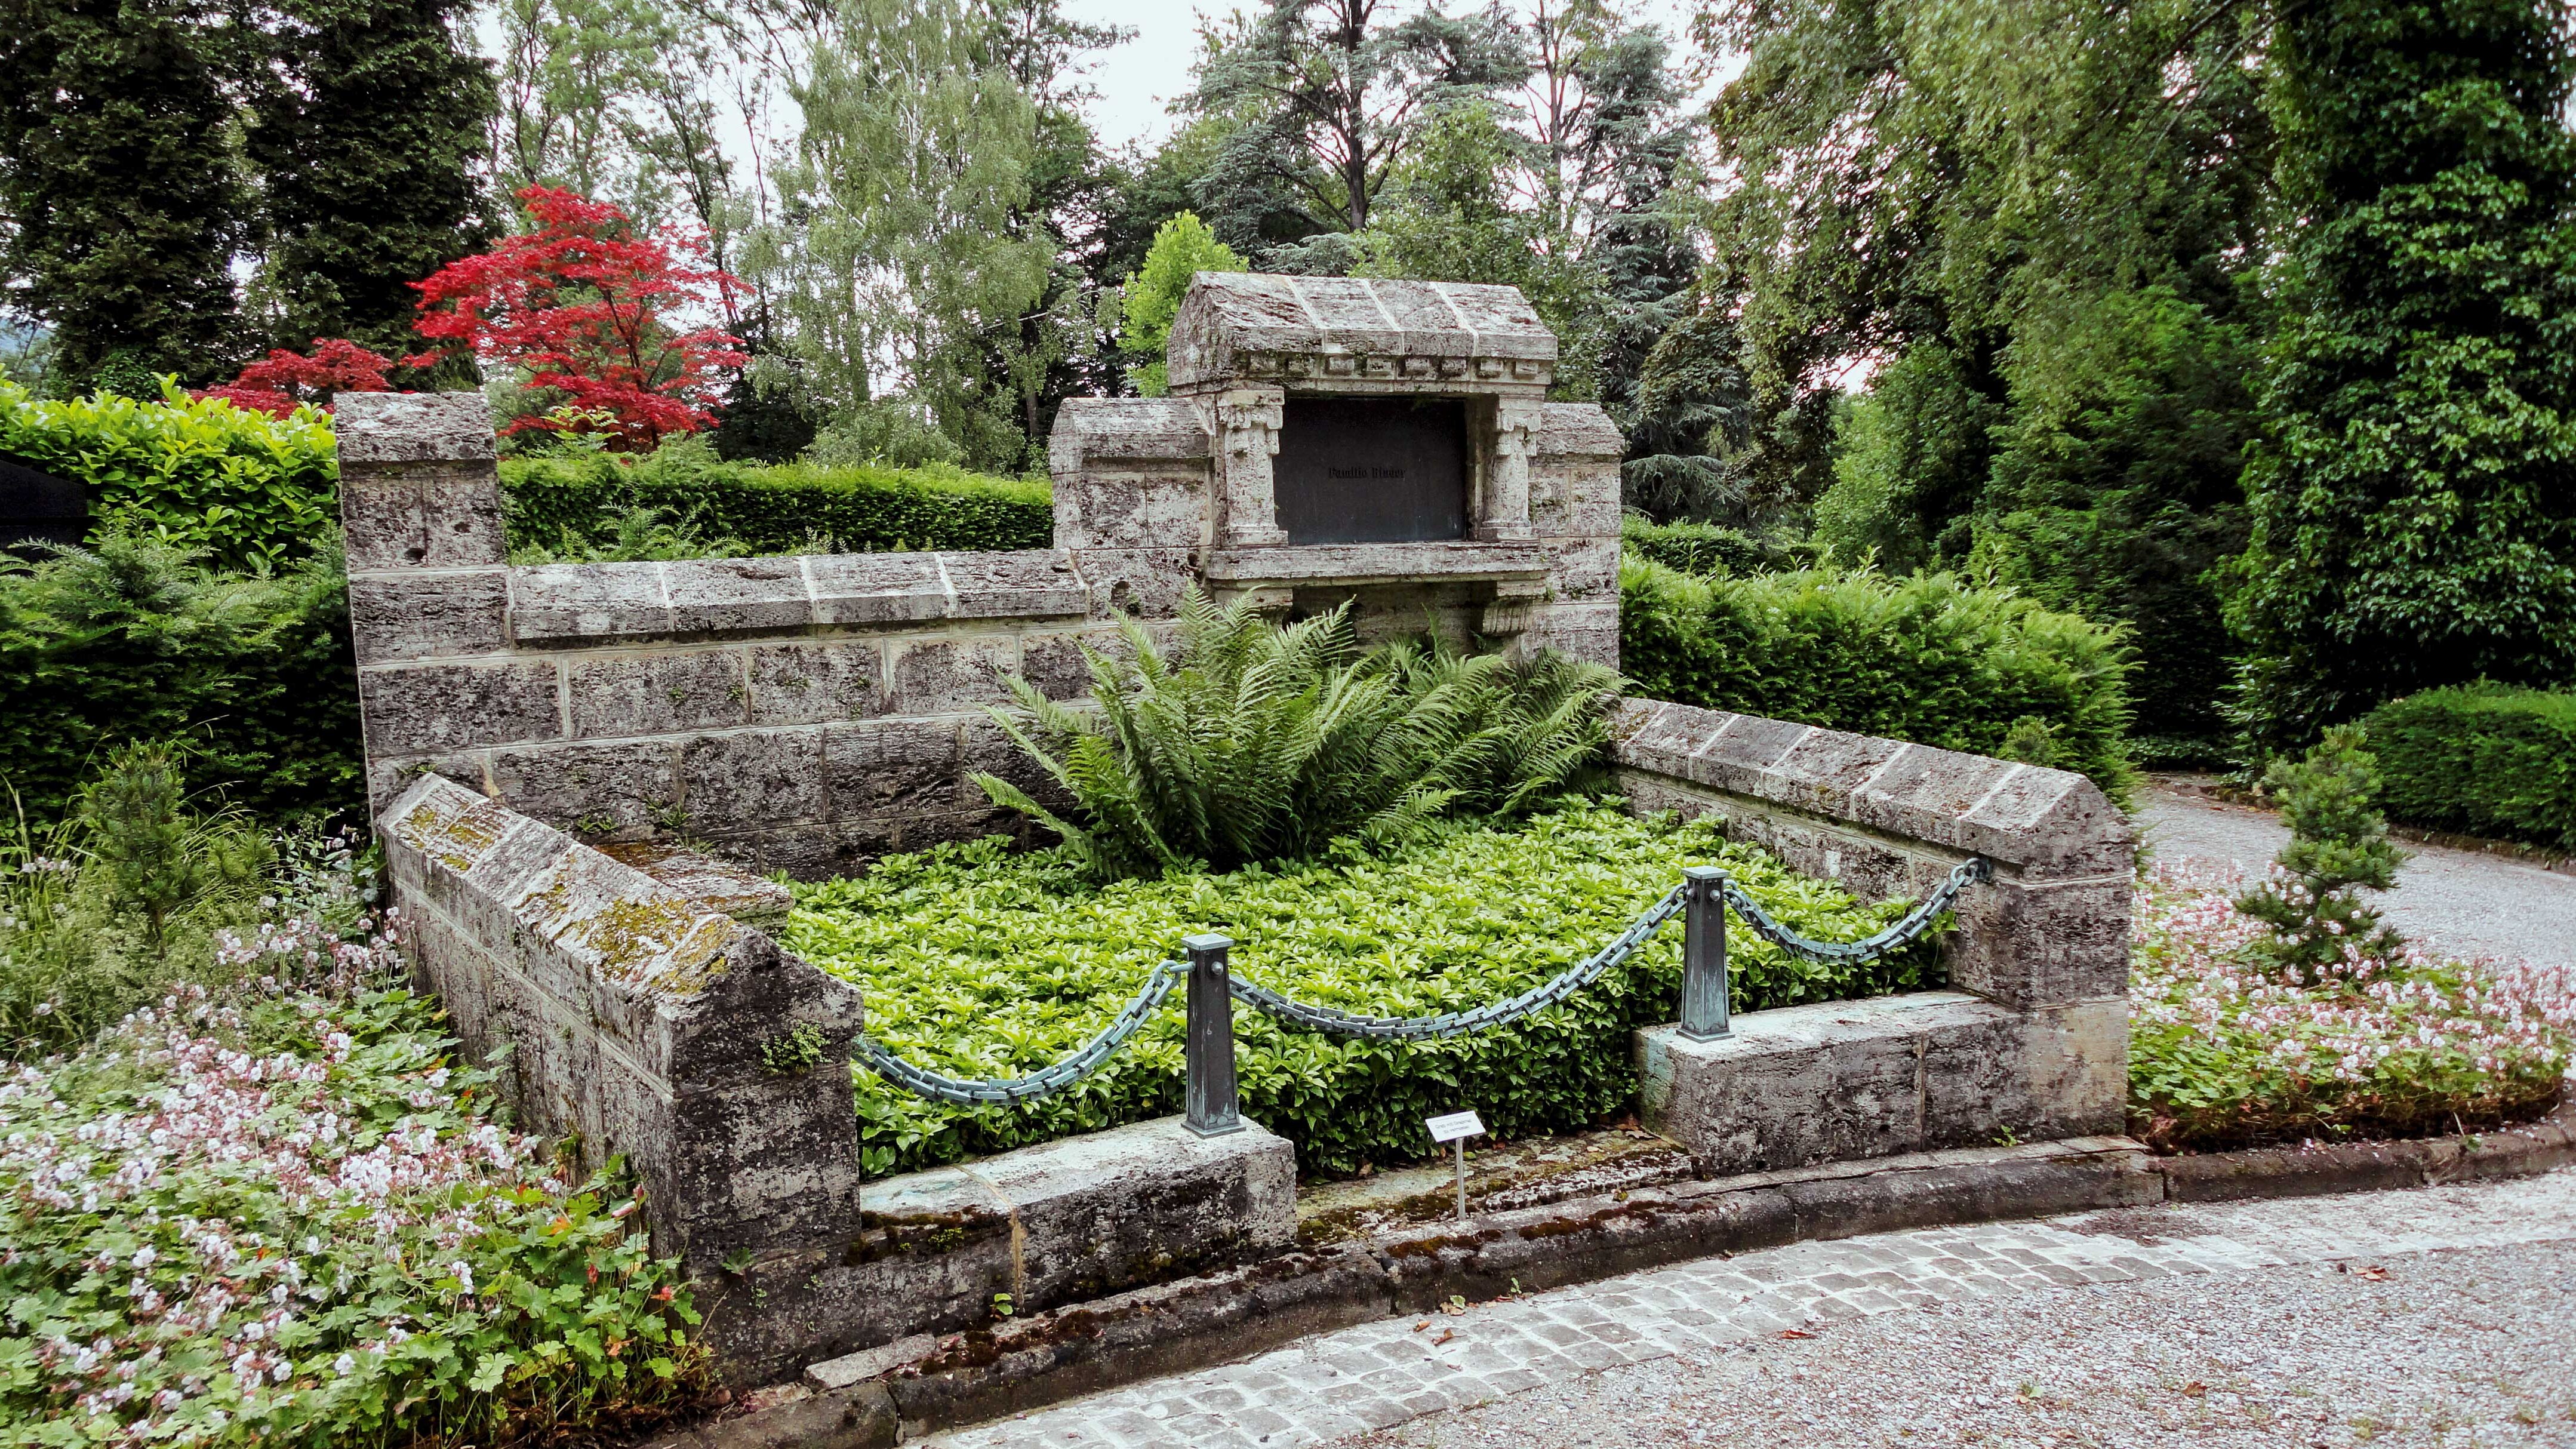 Friedhof Manegg in Wollishofen